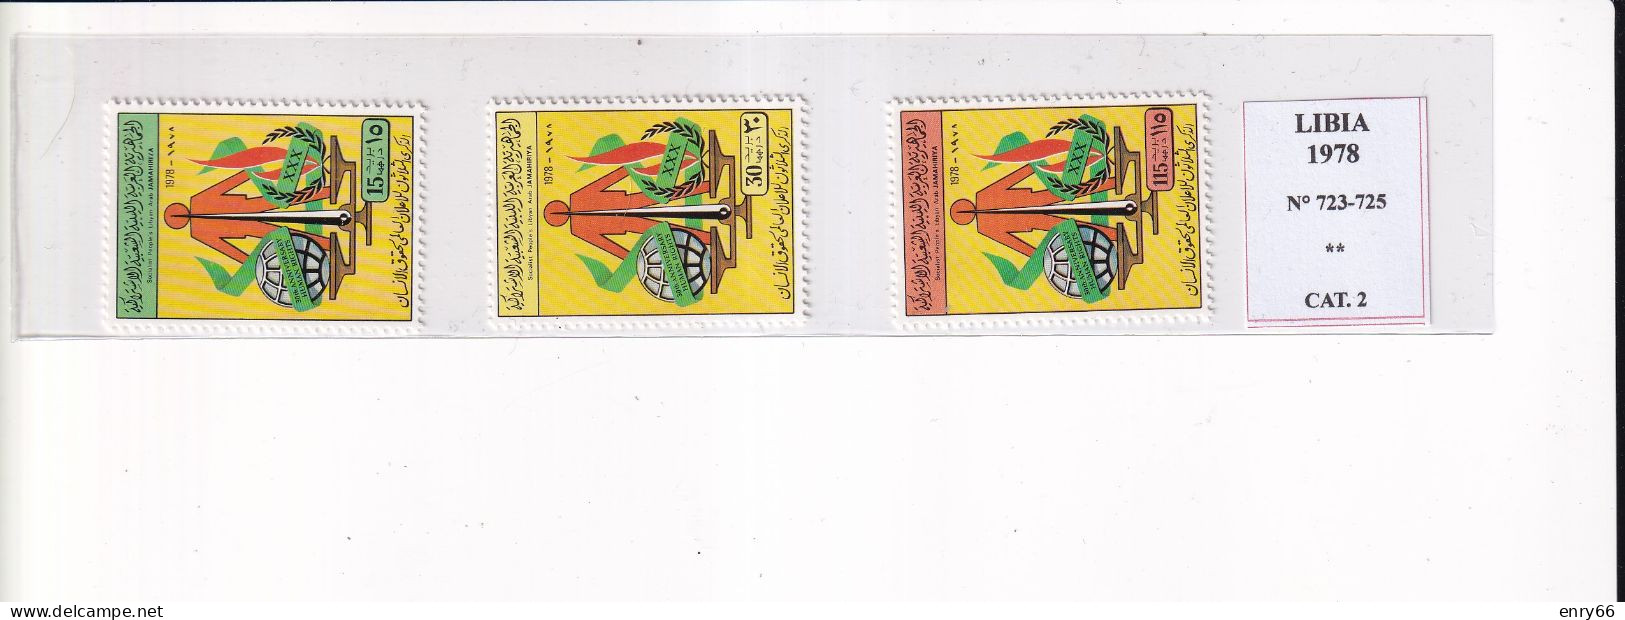 LIBIA 1978 N°723.725 MNH - Libia